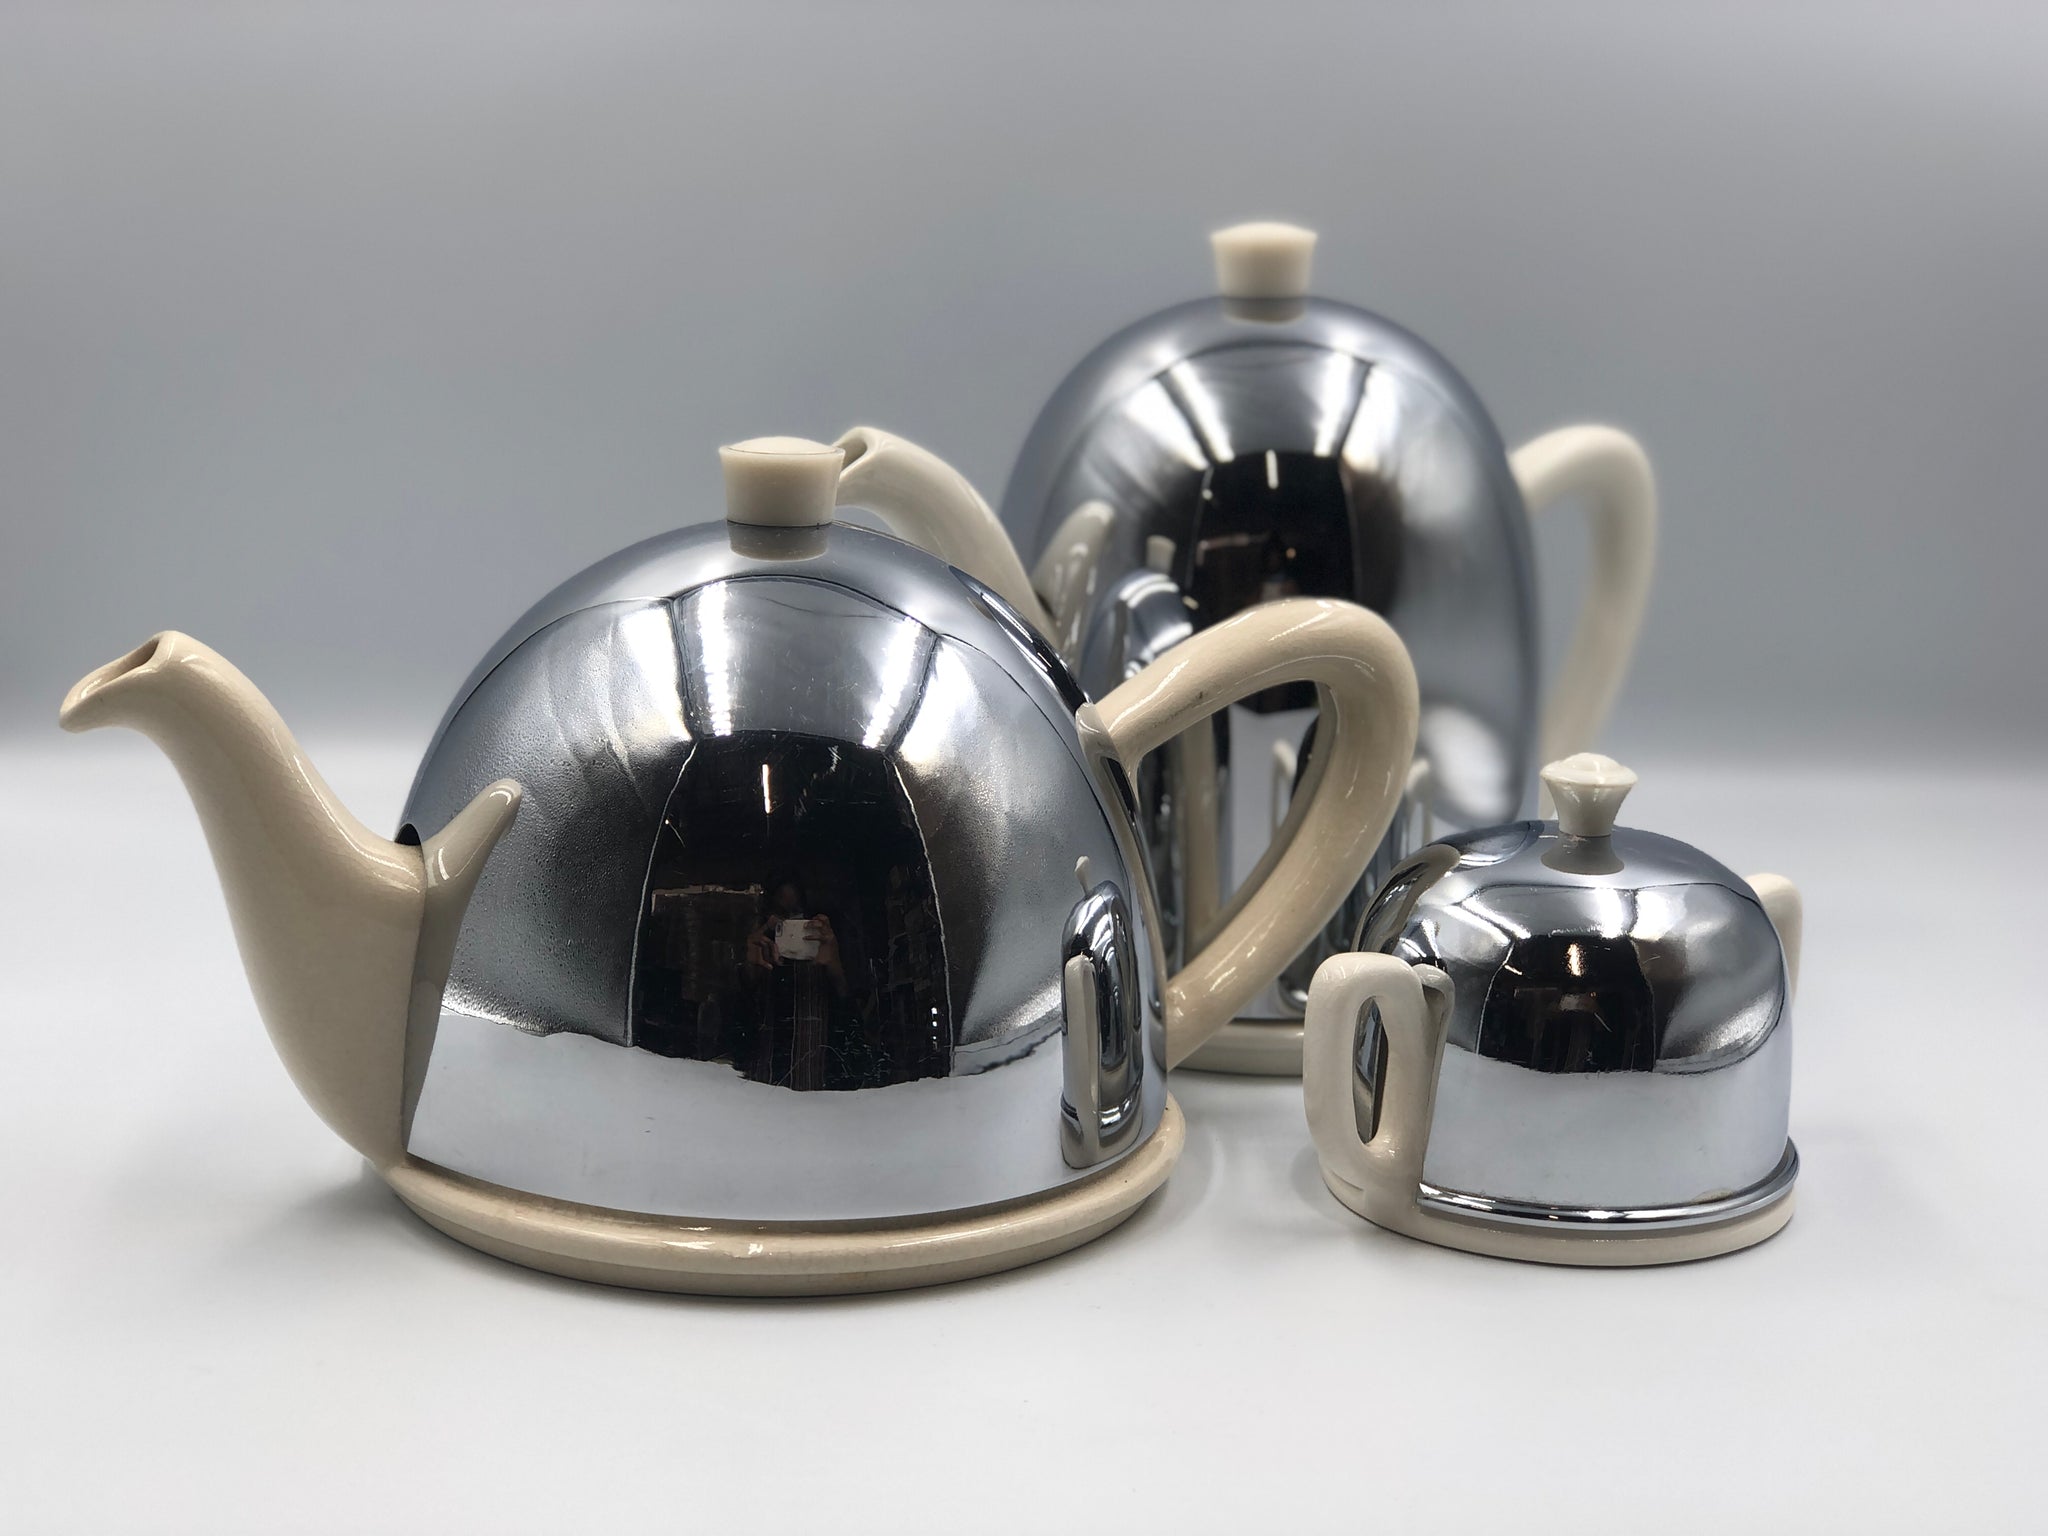 1950s Teapot Chrome & Ceramic Everhot Thermal Teapot